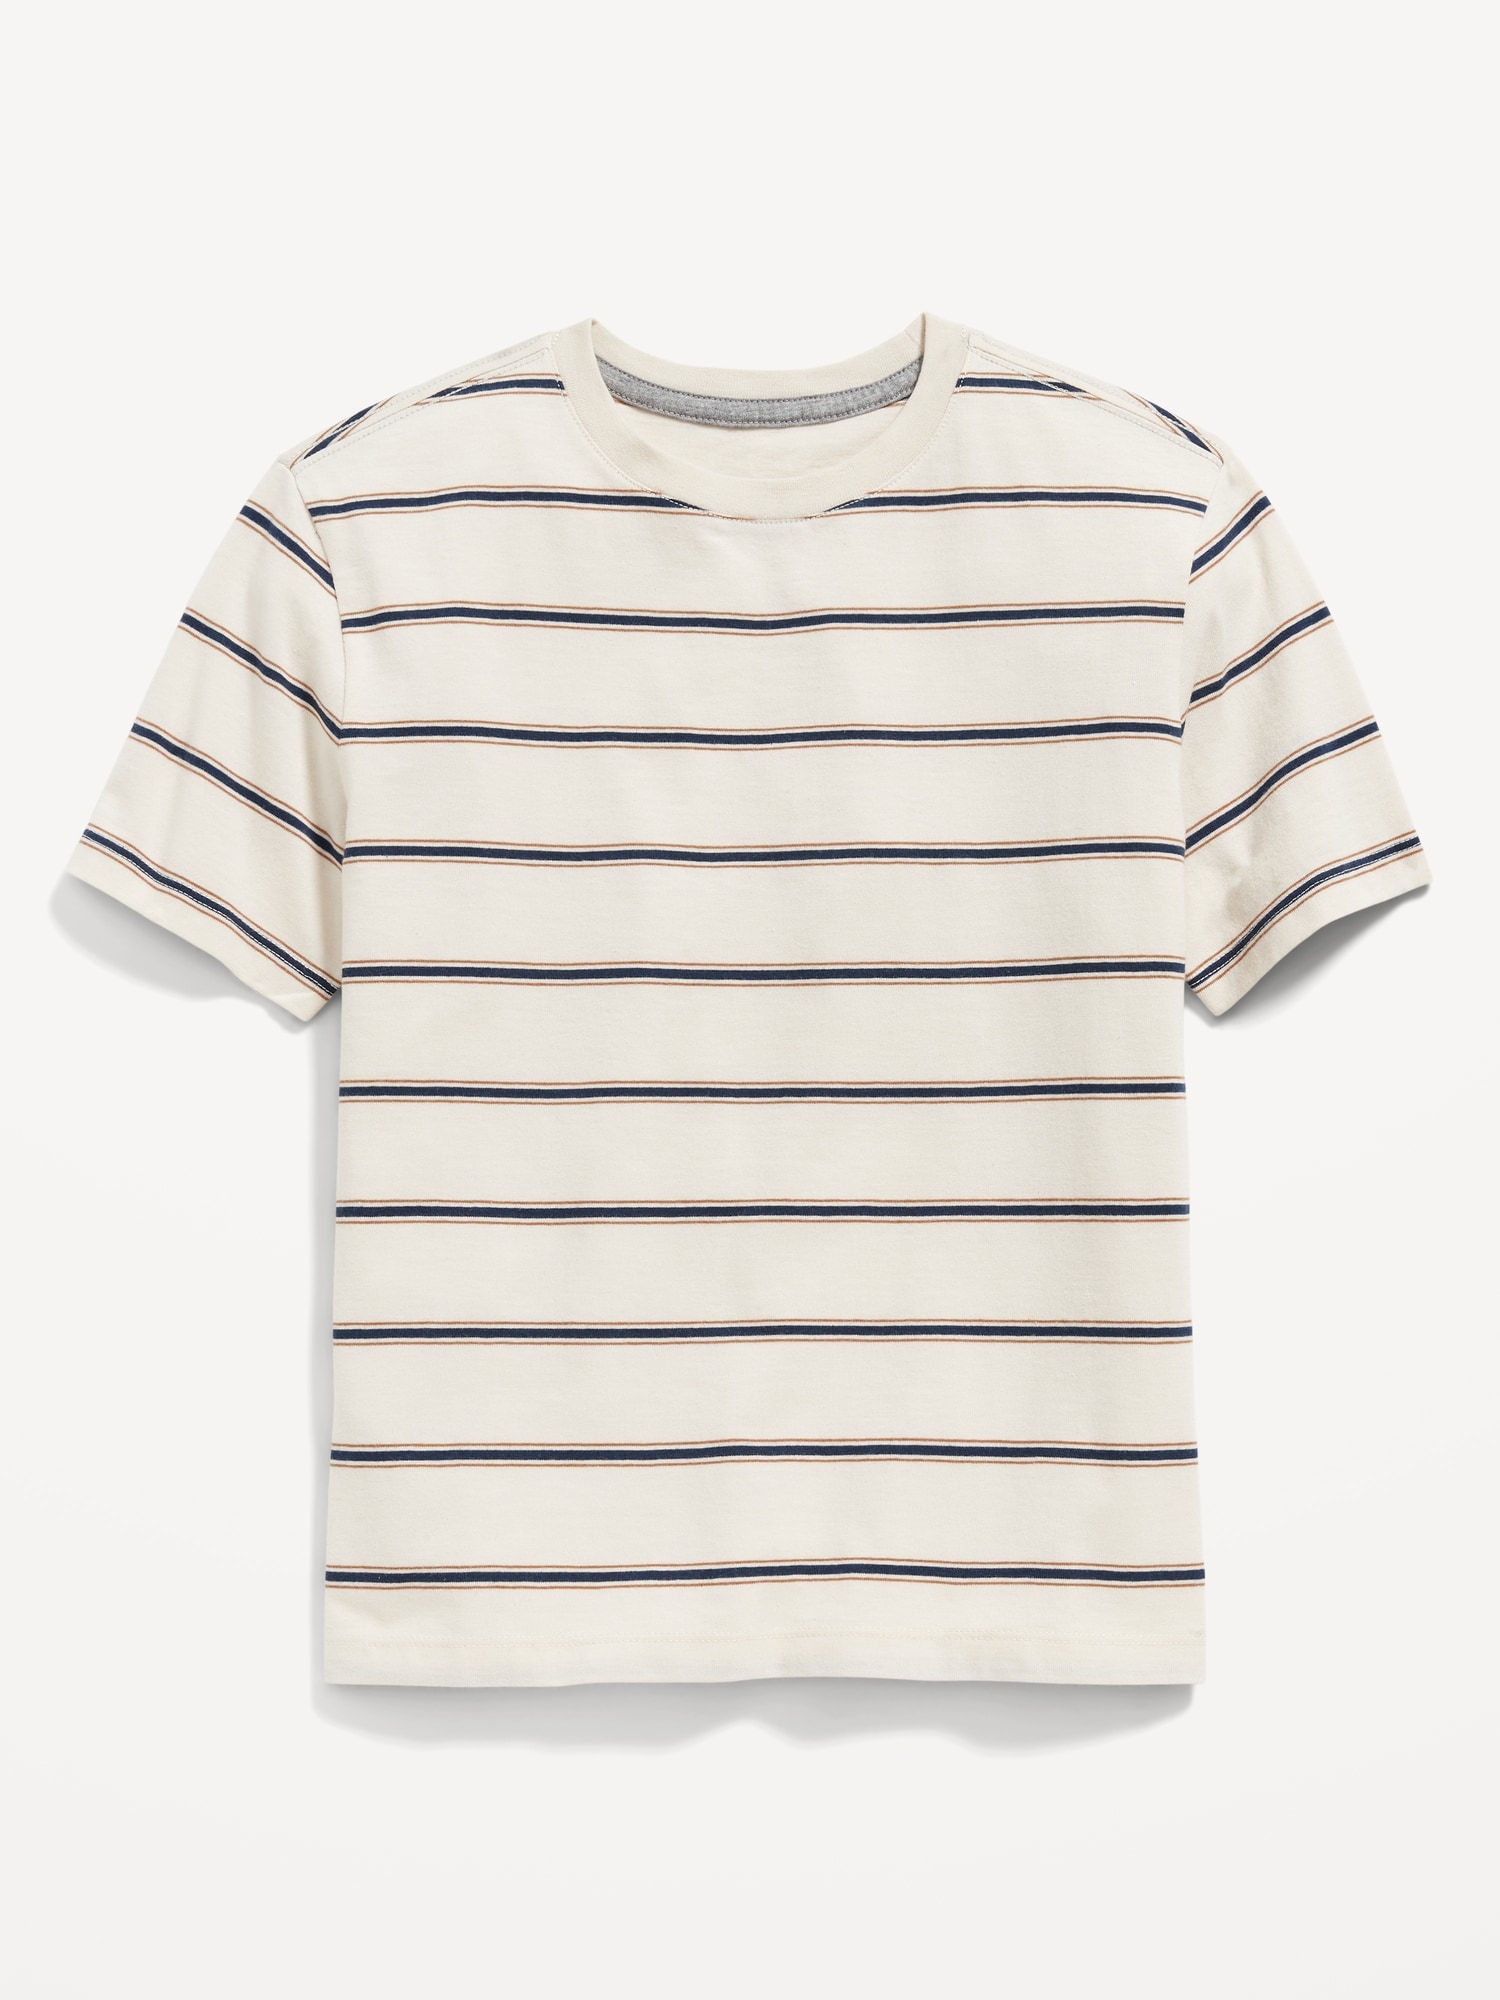 Old Navy Softest Short-Sleeve Striped T-Shirt for Boys multi. 1